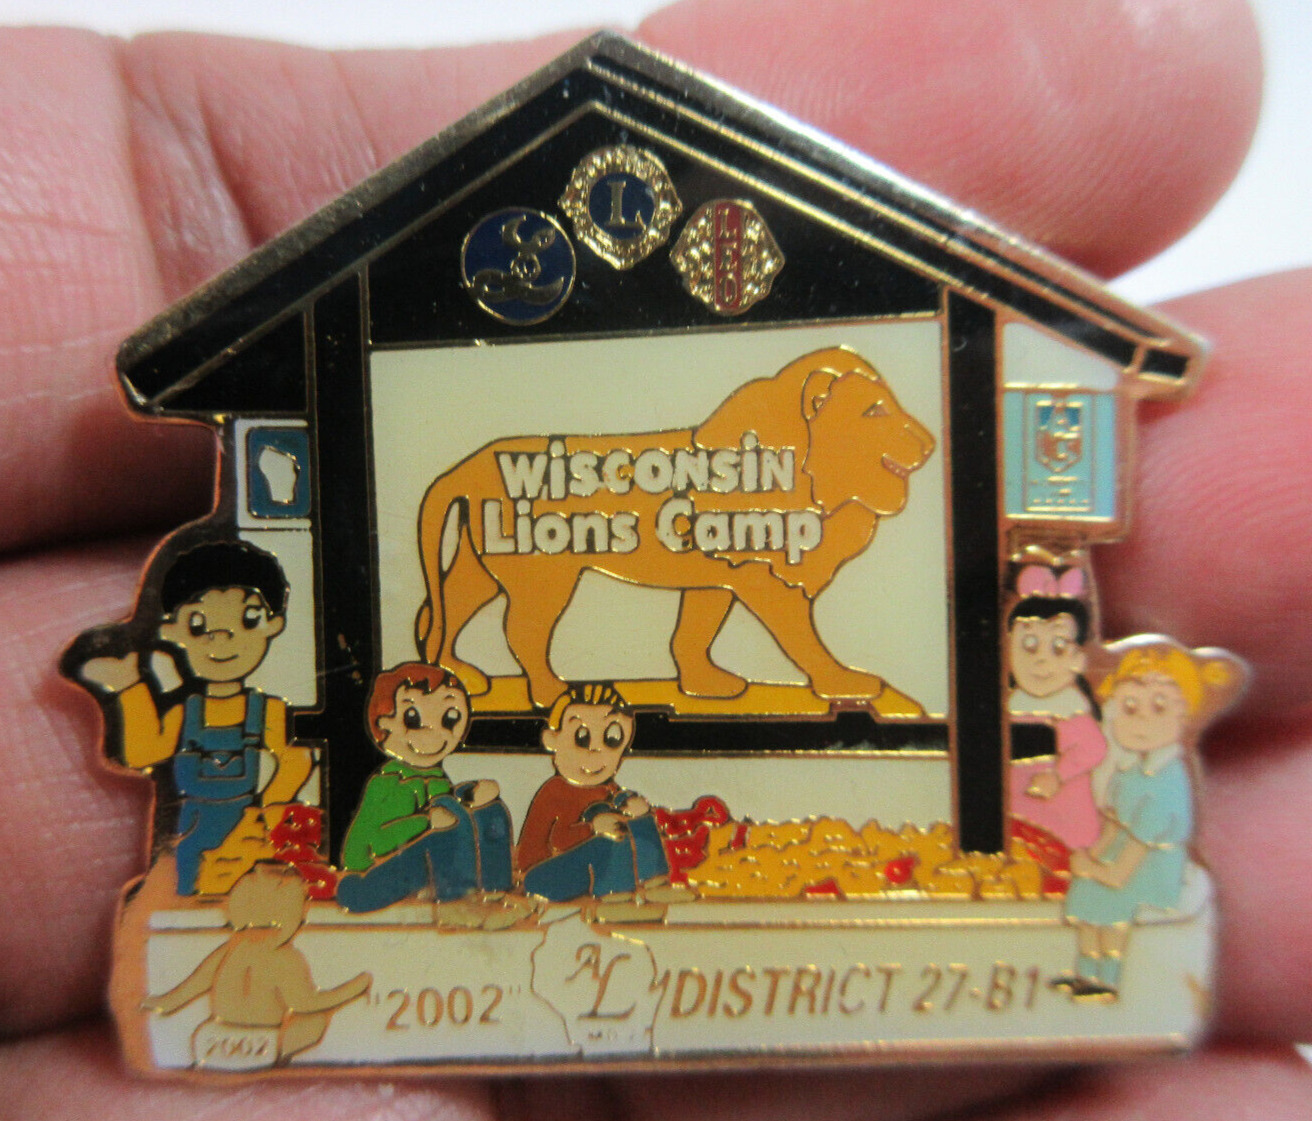 2002 Lions Club International Lioness Club Wisconsin camp 27-B1 lapel hat pin